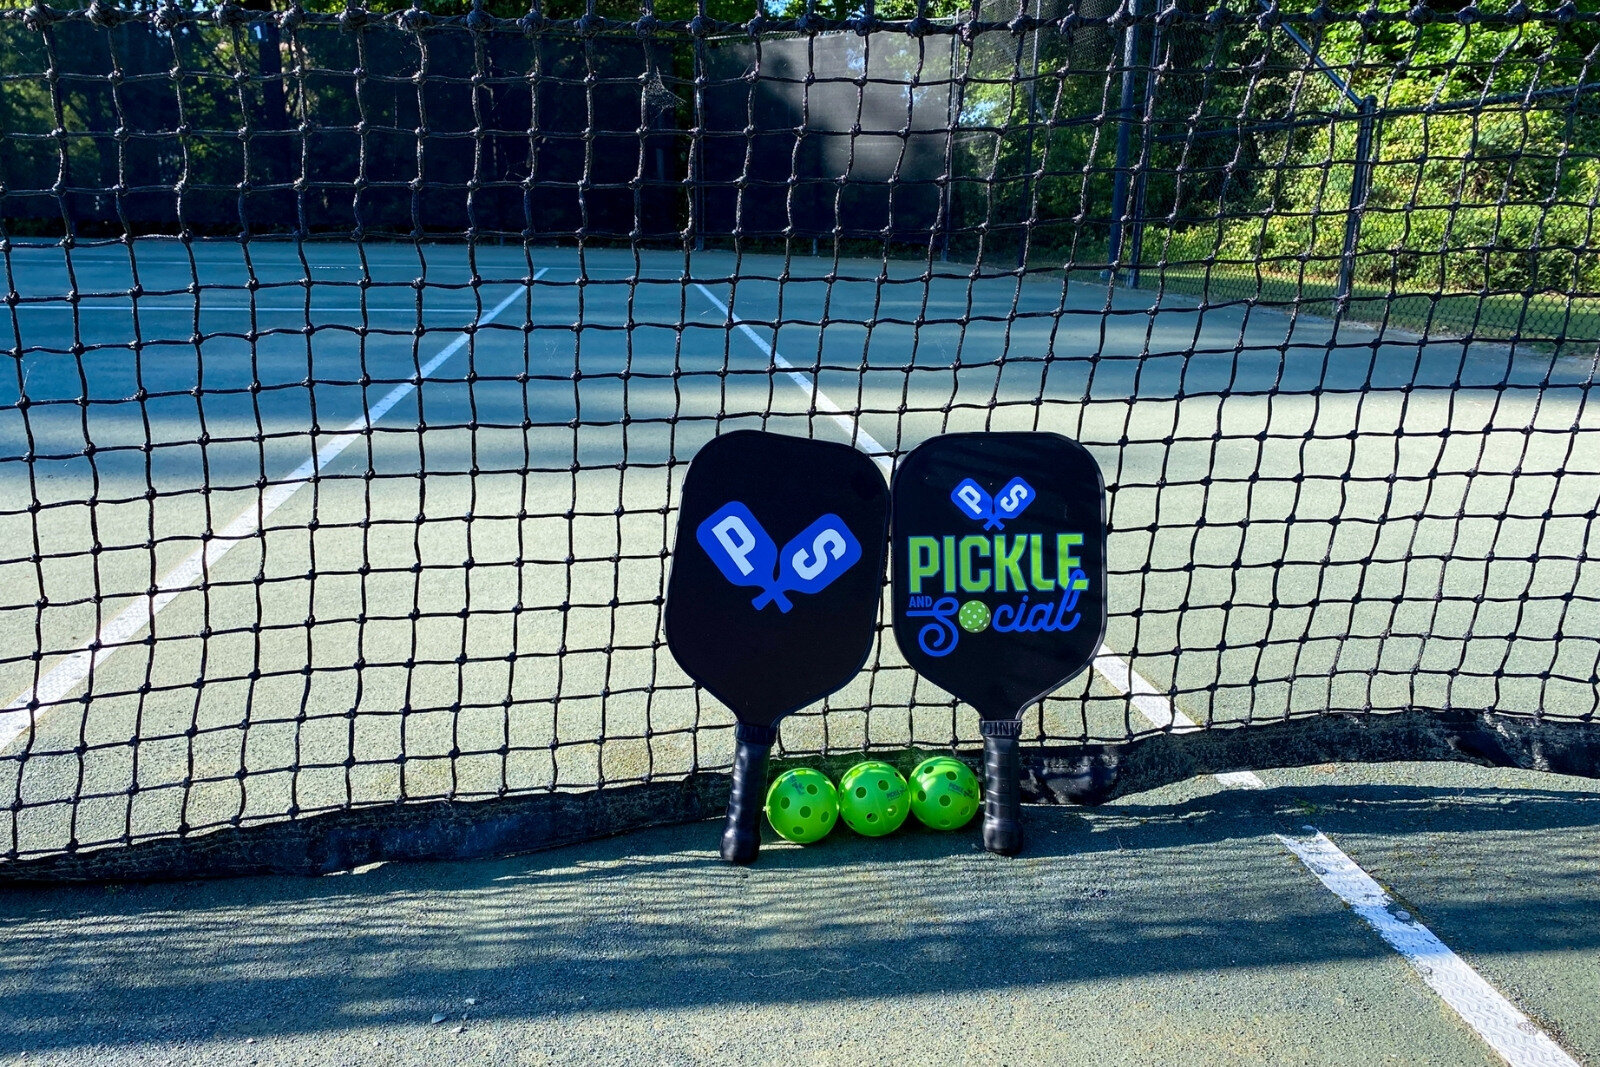 Pickle Ball Paddles & Balls On Court